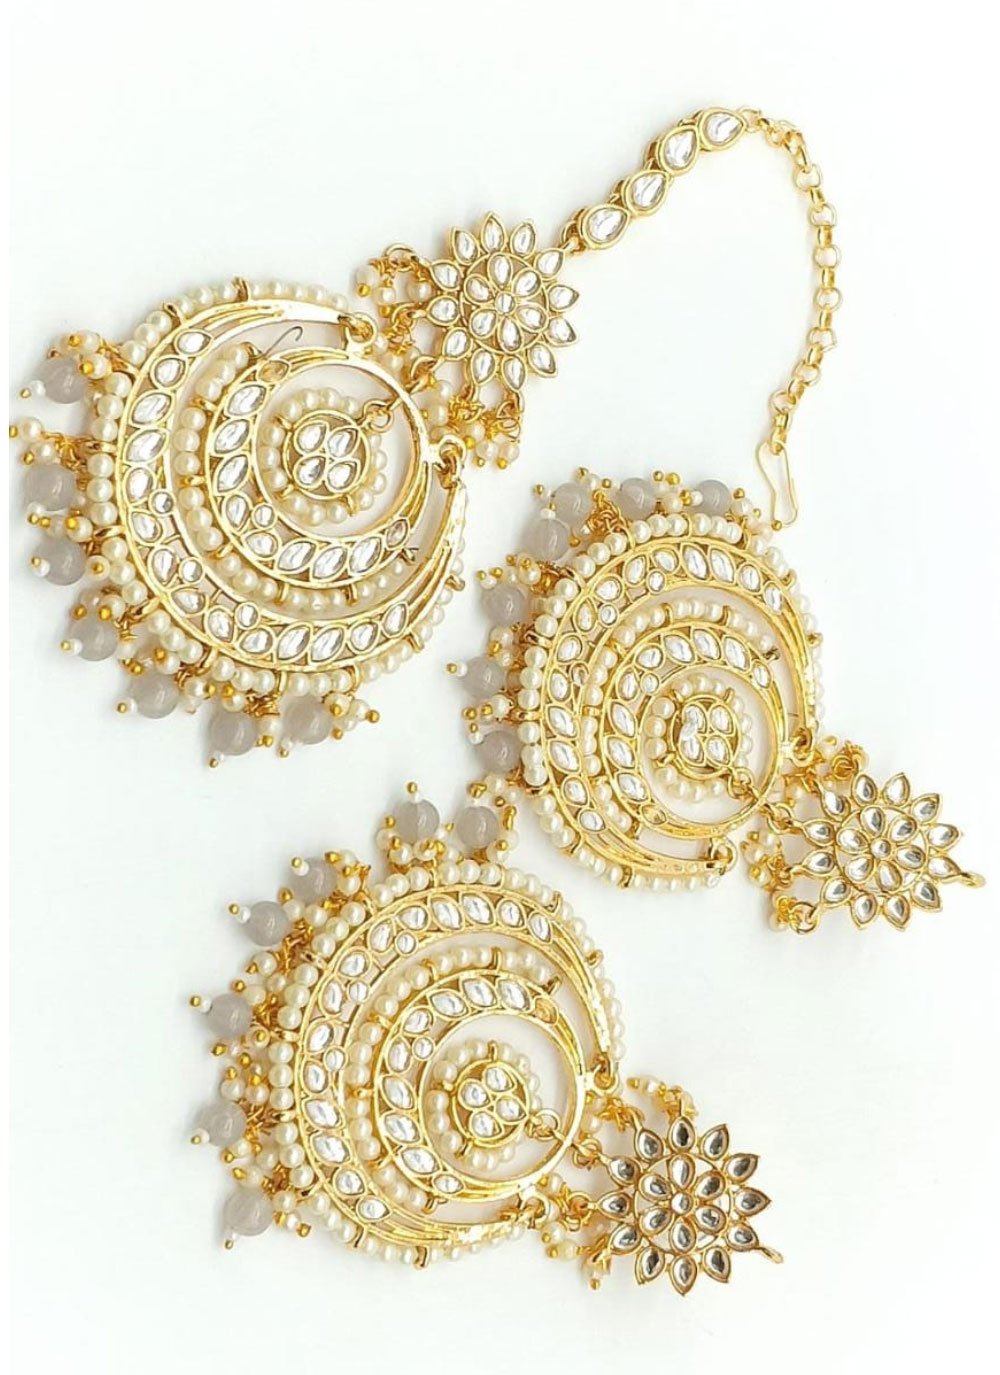 Amazing Gold Rodium Polish Beads Work Earrings Set For Party